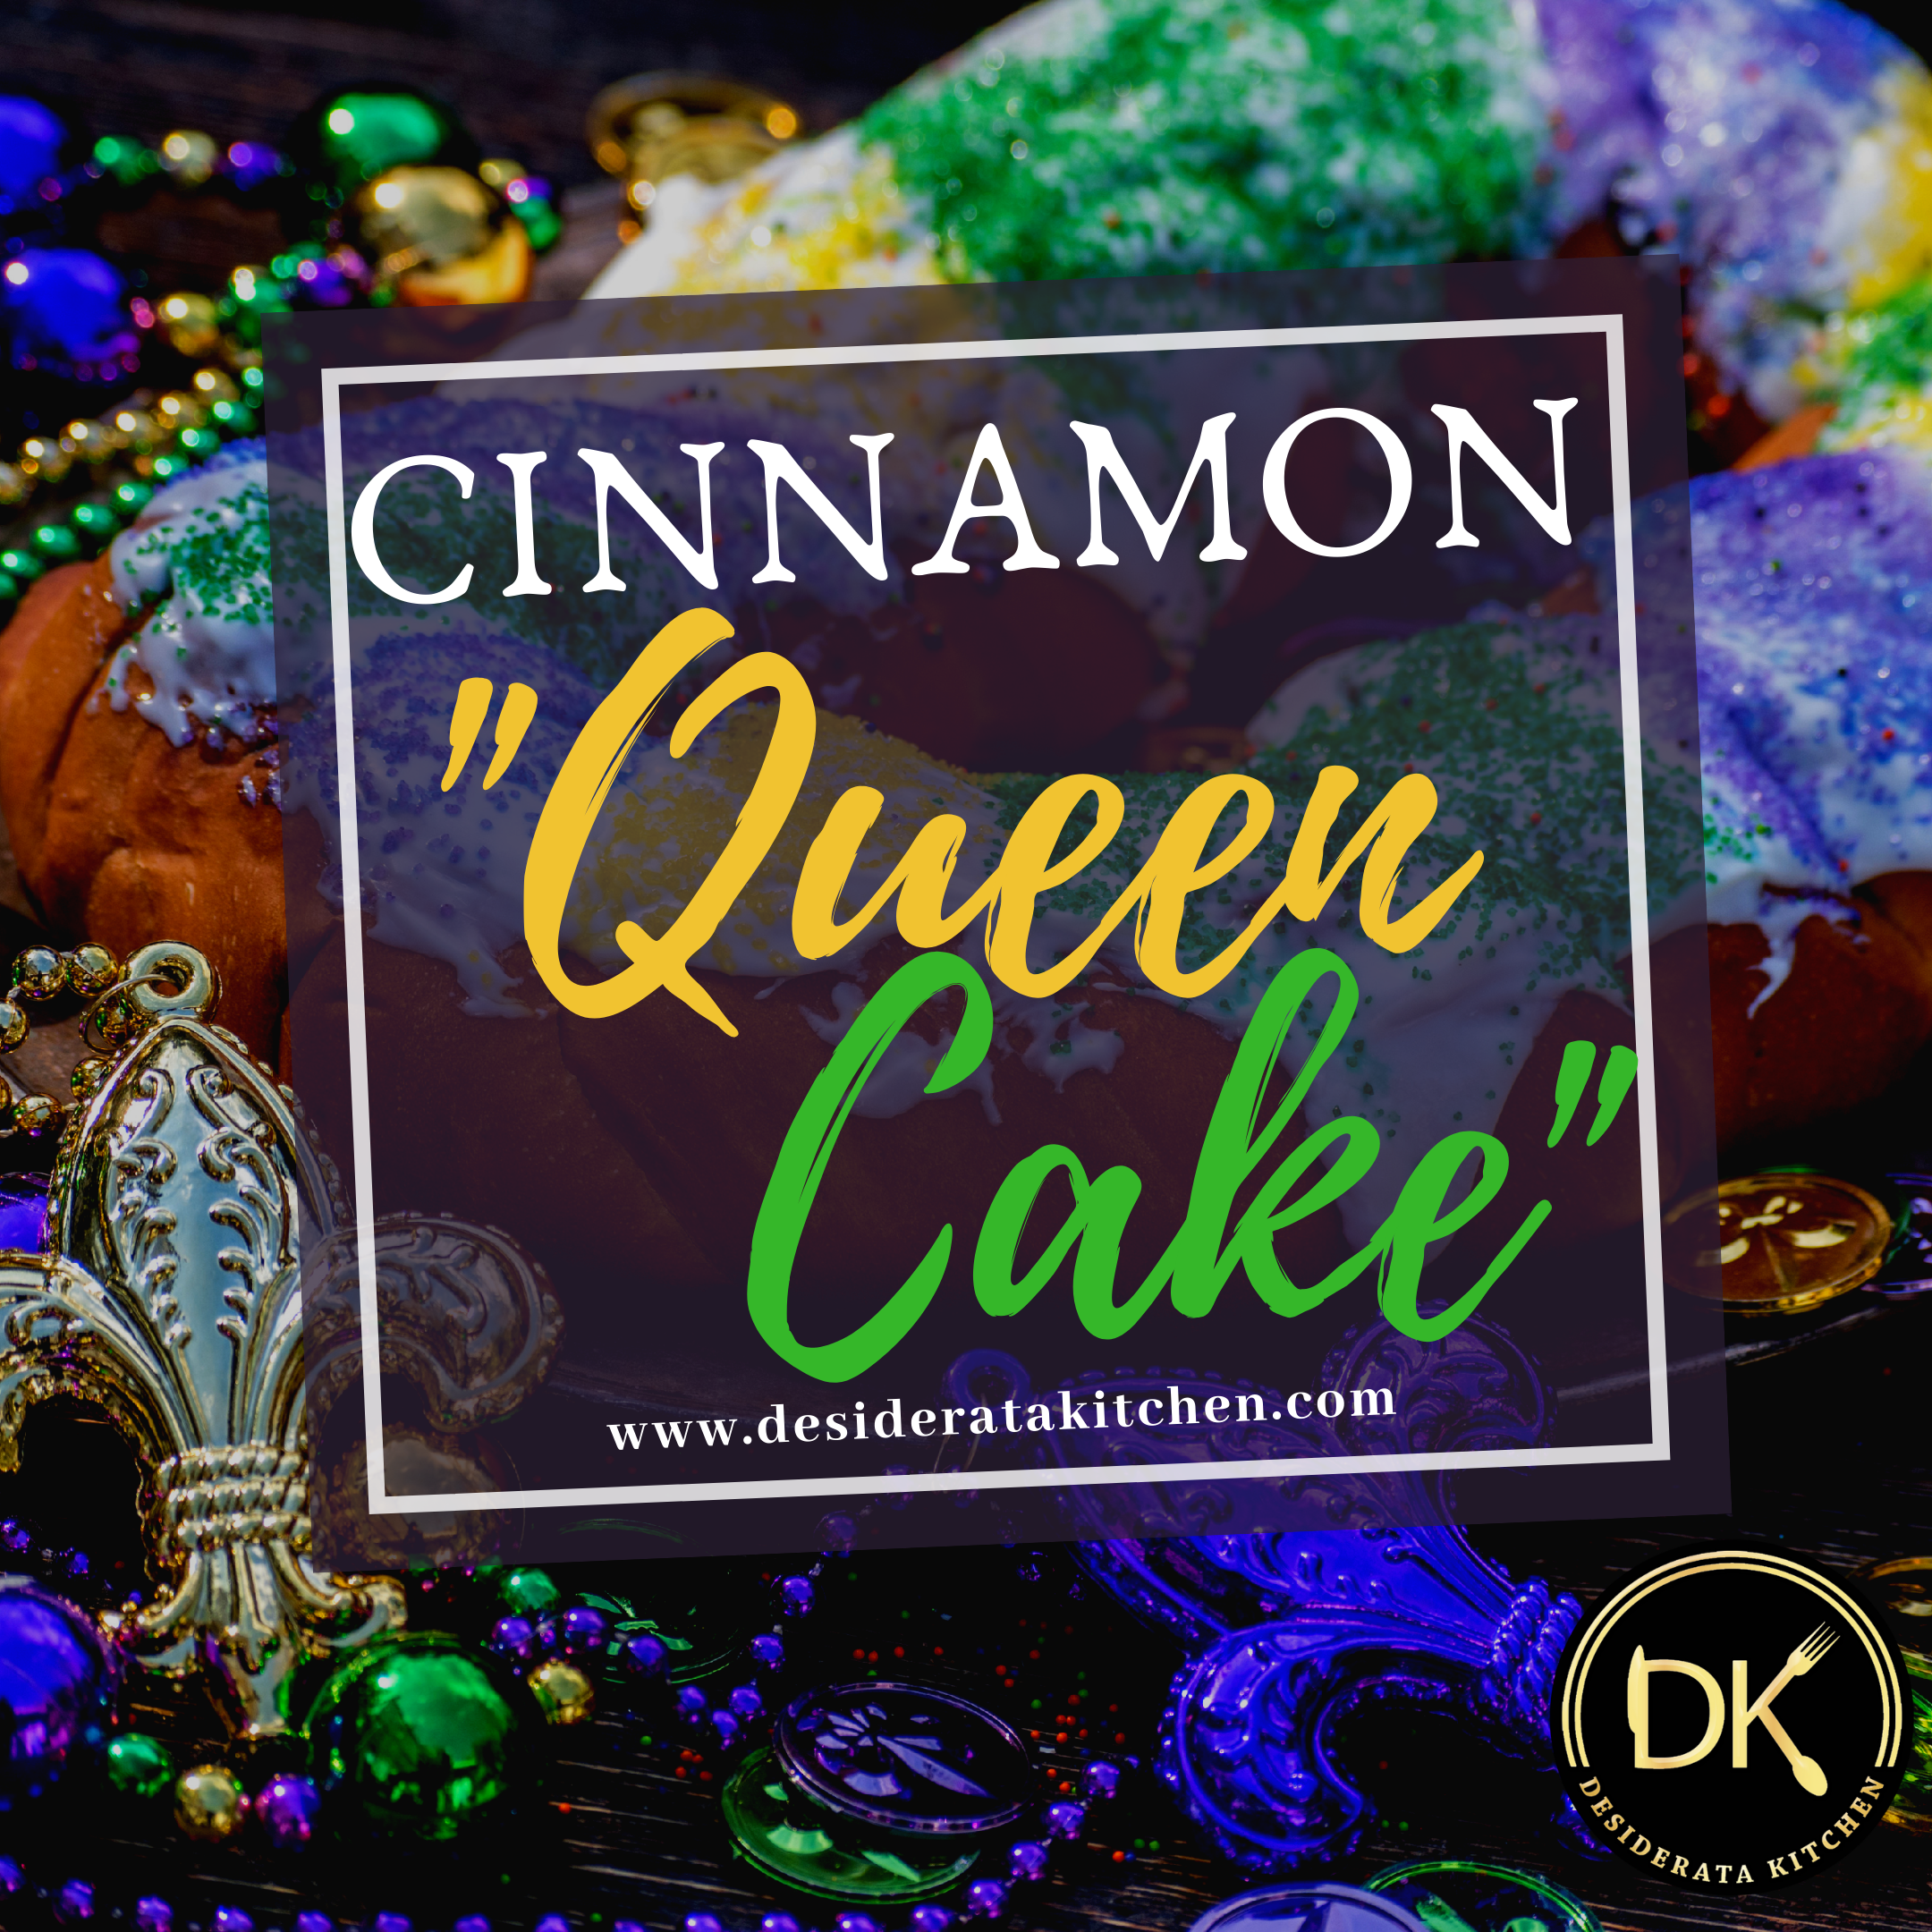 Cinnamon Keteaux "Queen Cake" King Cake